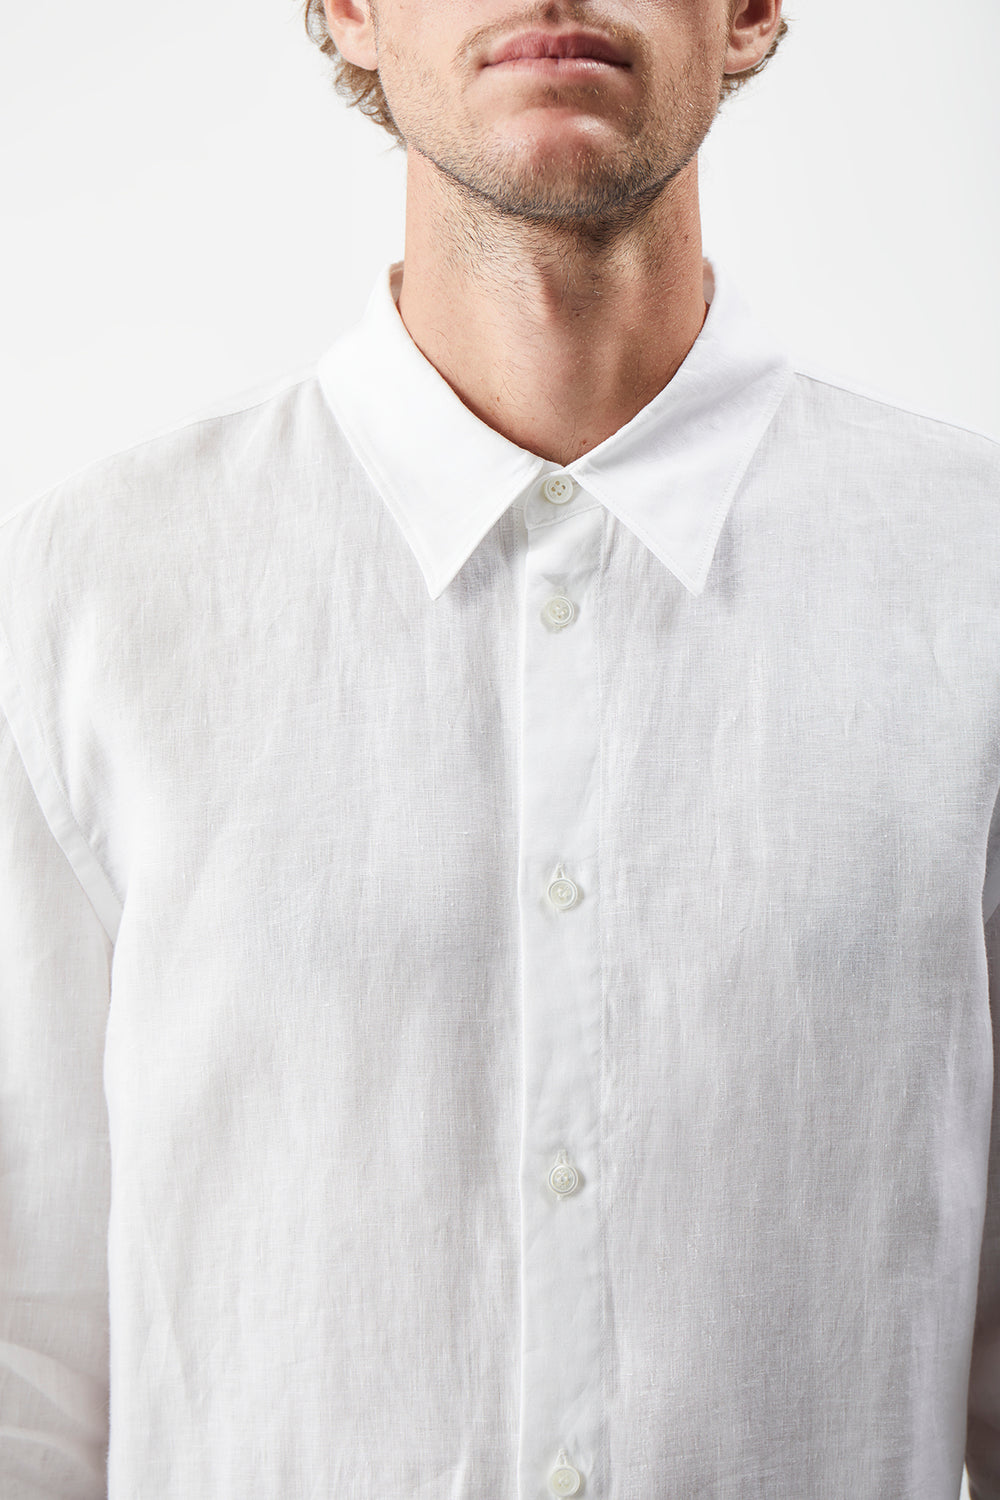 Quevedo Shirt in White Linen – Gabriela Hearst